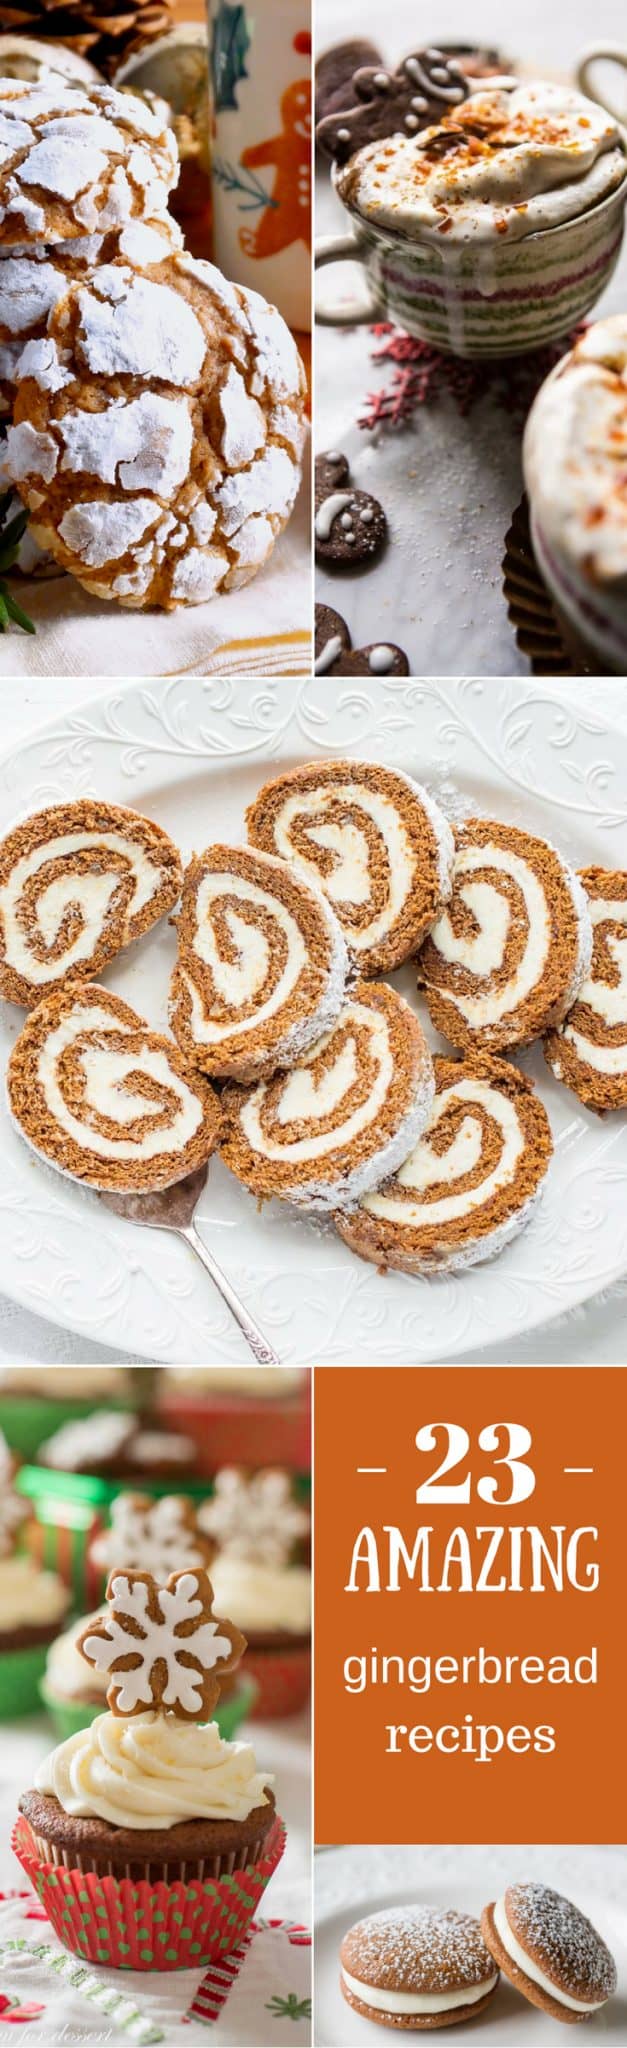 23 Amazing Gingerbread Recipes from a few amazing bloggers | www.savingdessert.com